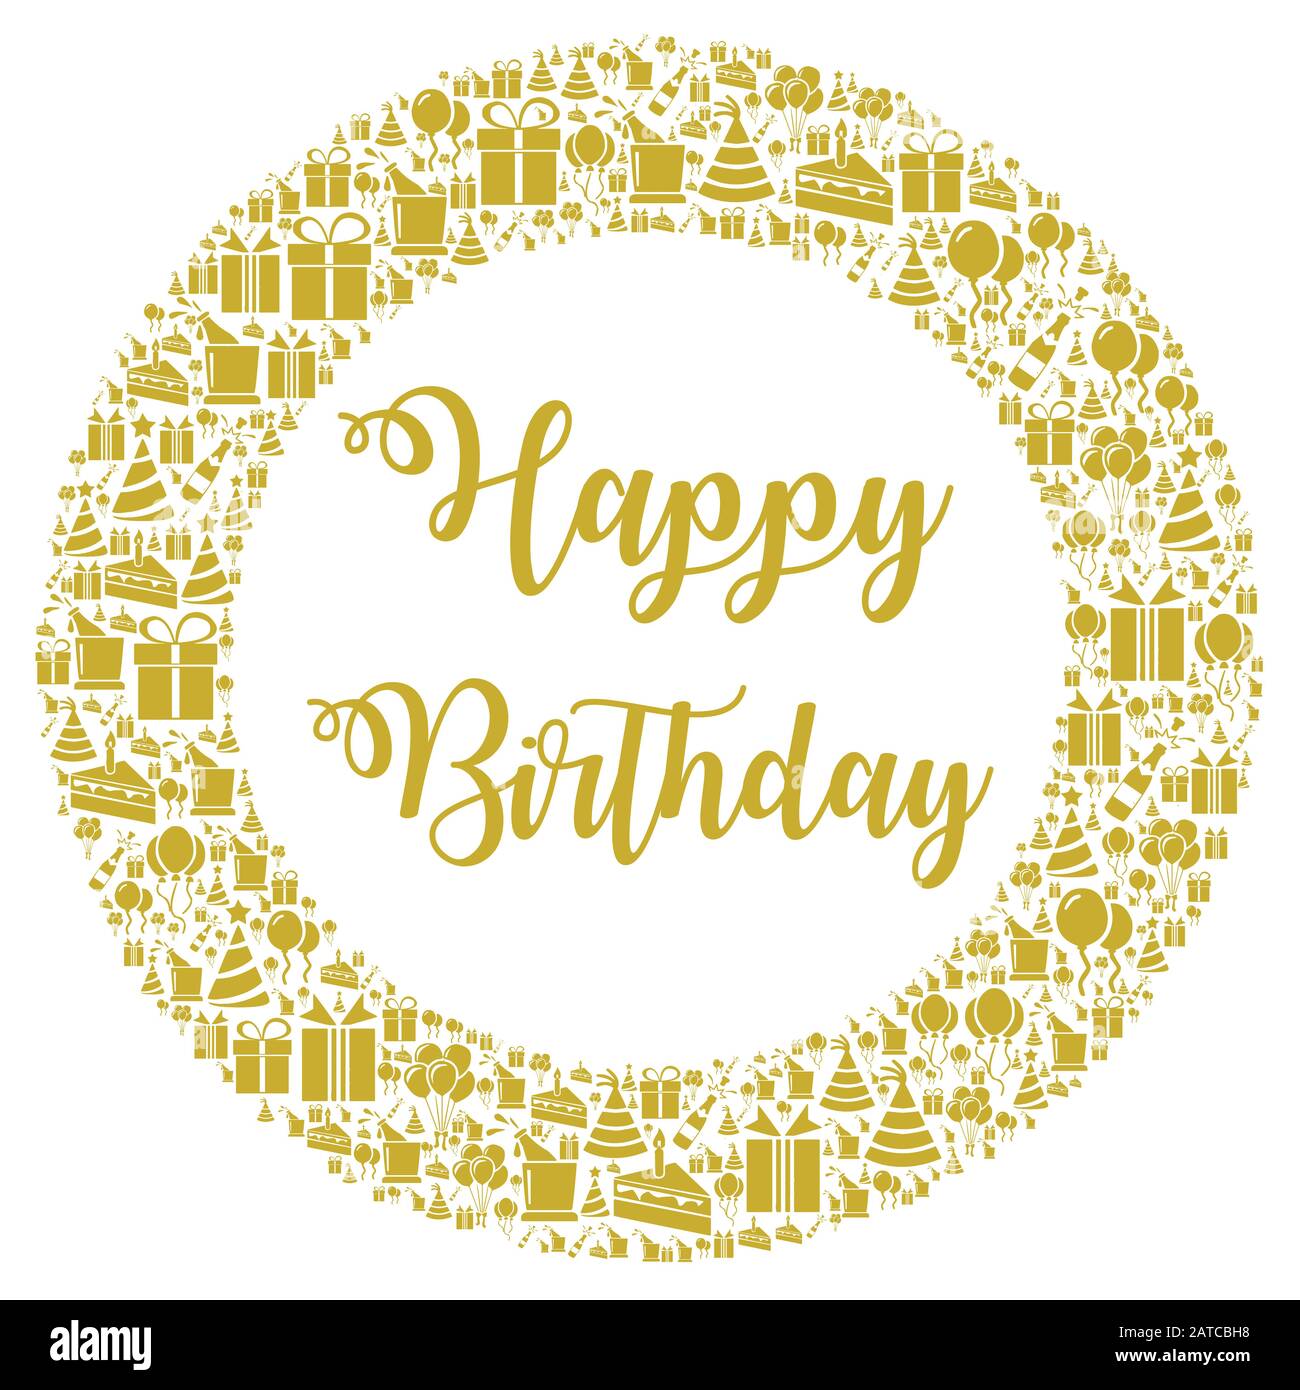 Happy Birthday card sign illustration Stock Photo